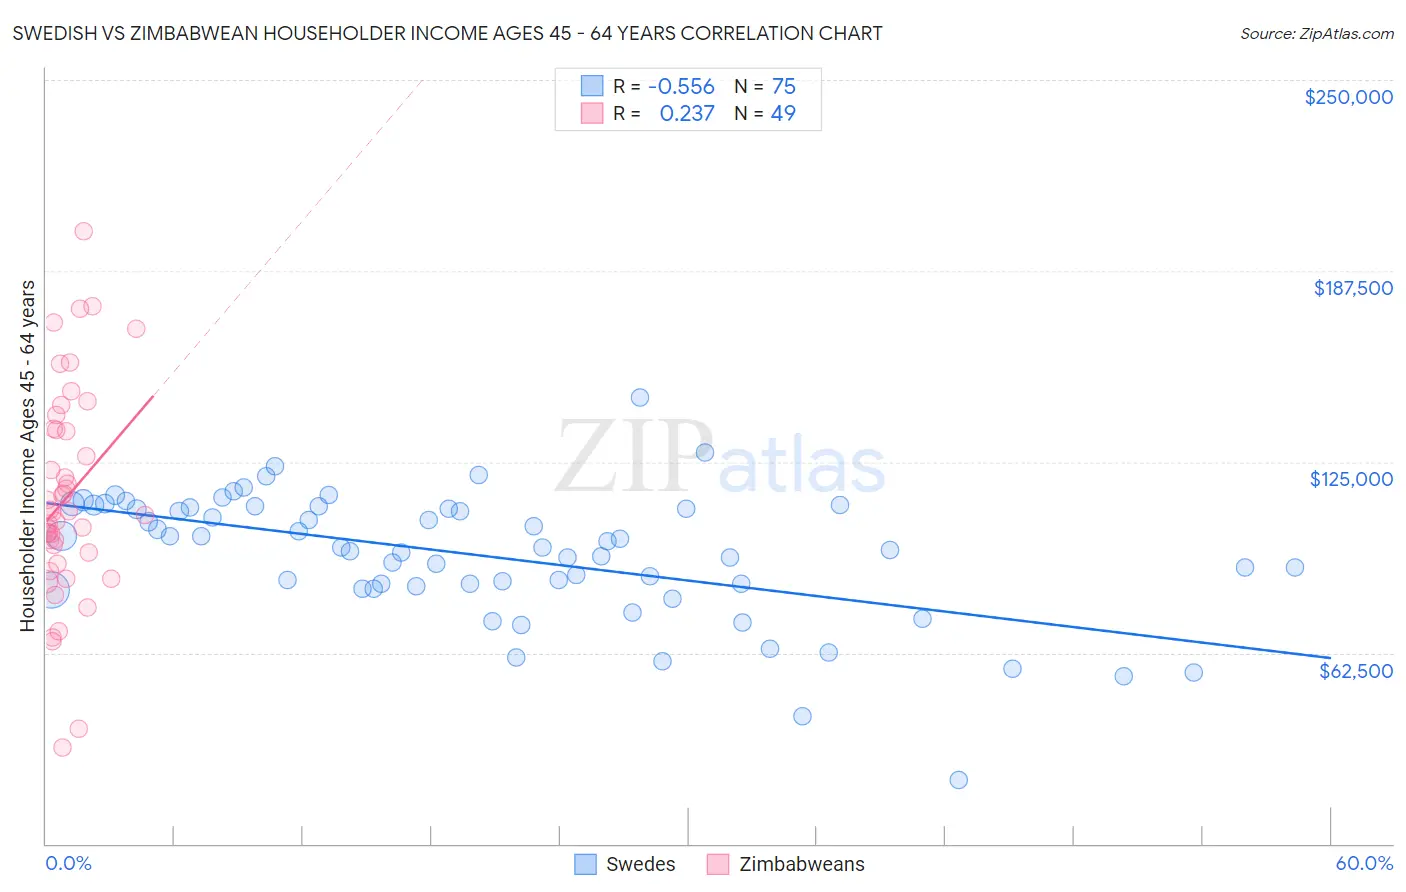 Swedish vs Zimbabwean Householder Income Ages 45 - 64 years